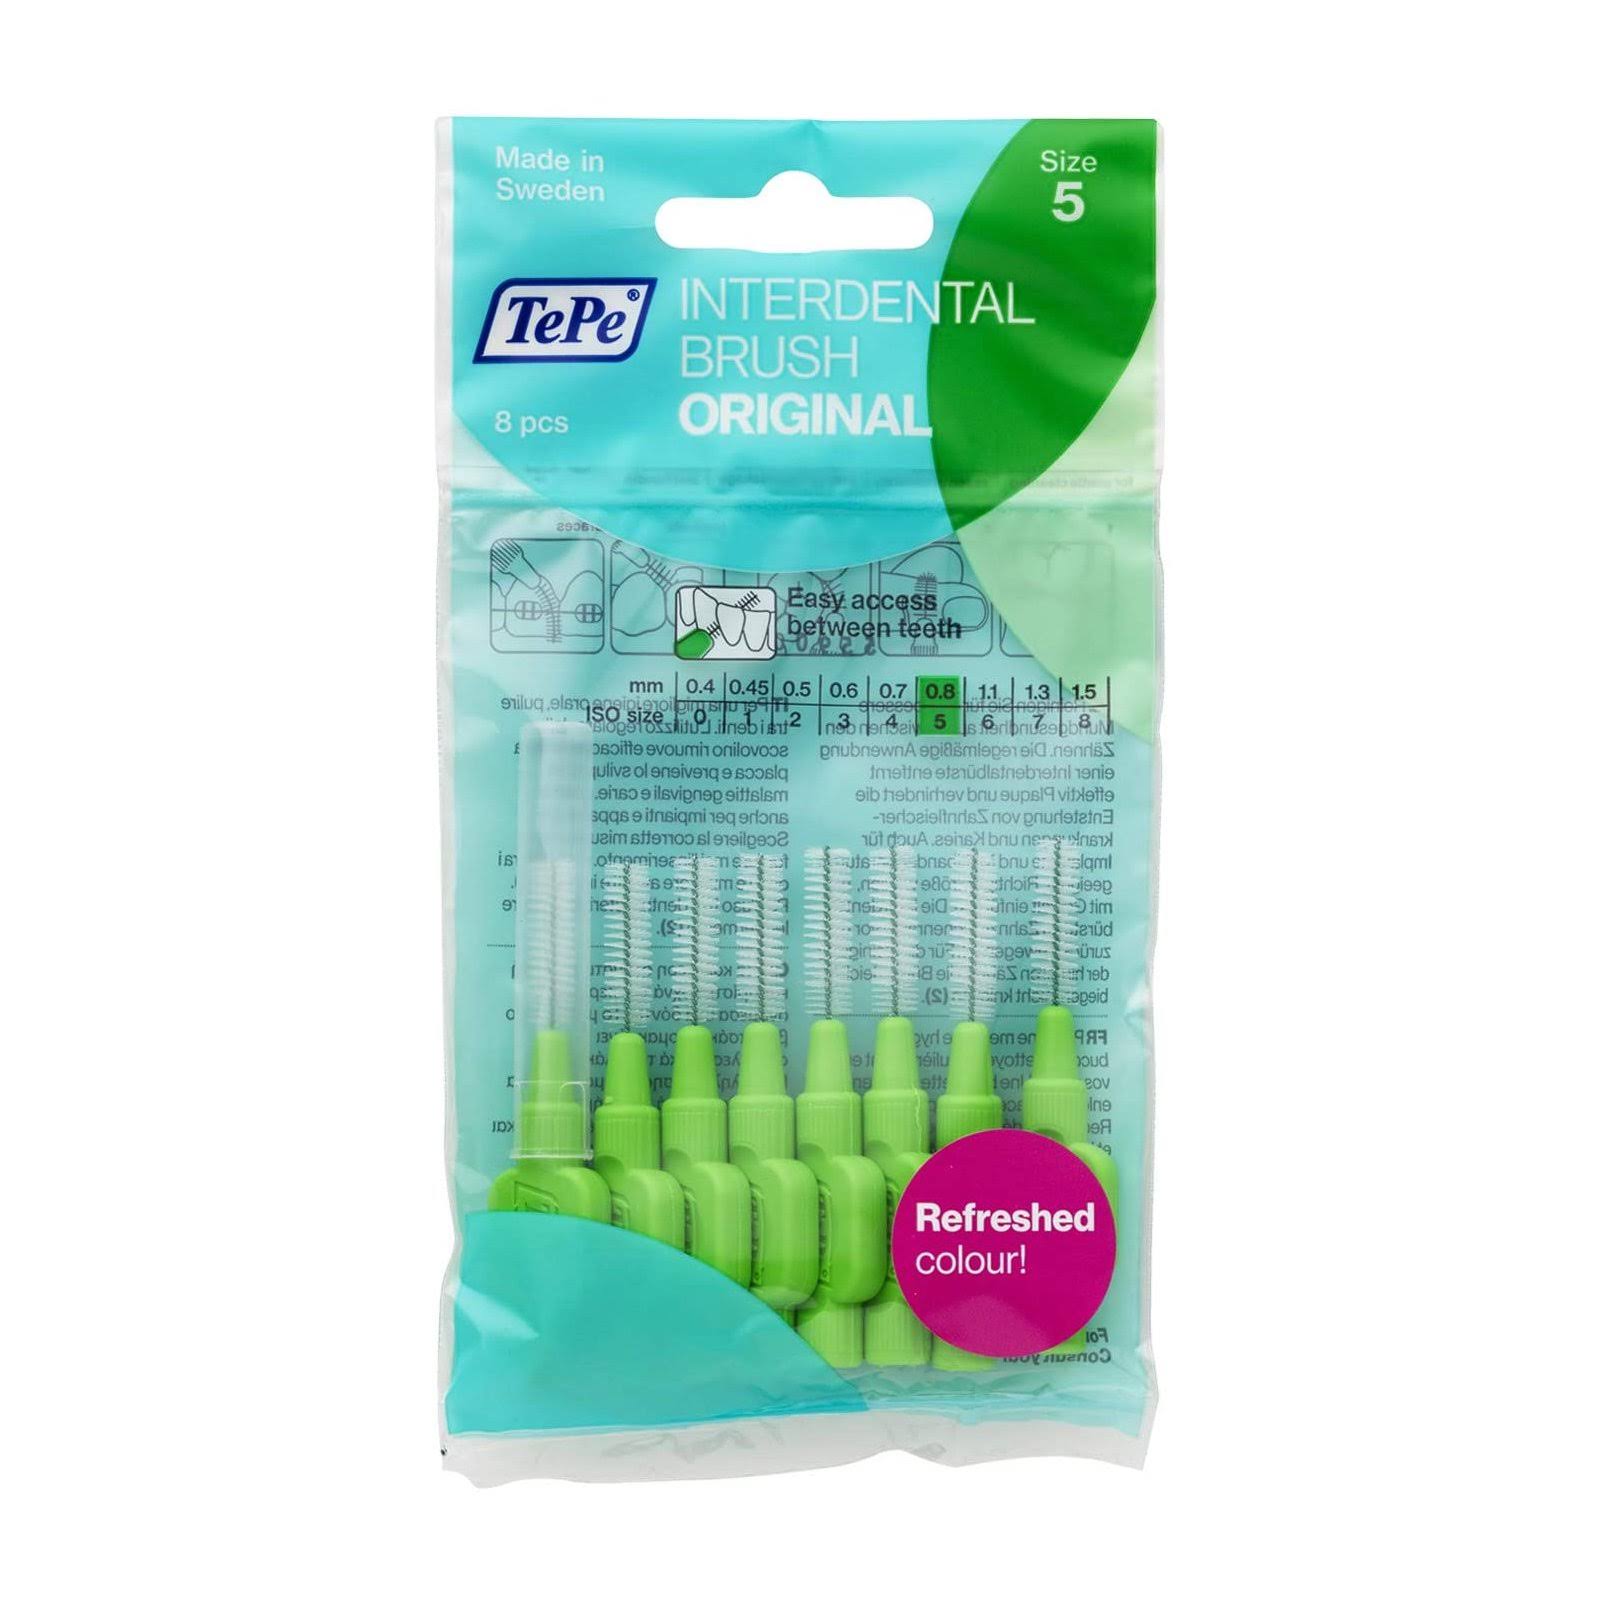 TEPE Interdental Brush Original Green 0.8mm Size 5 - 8pcs